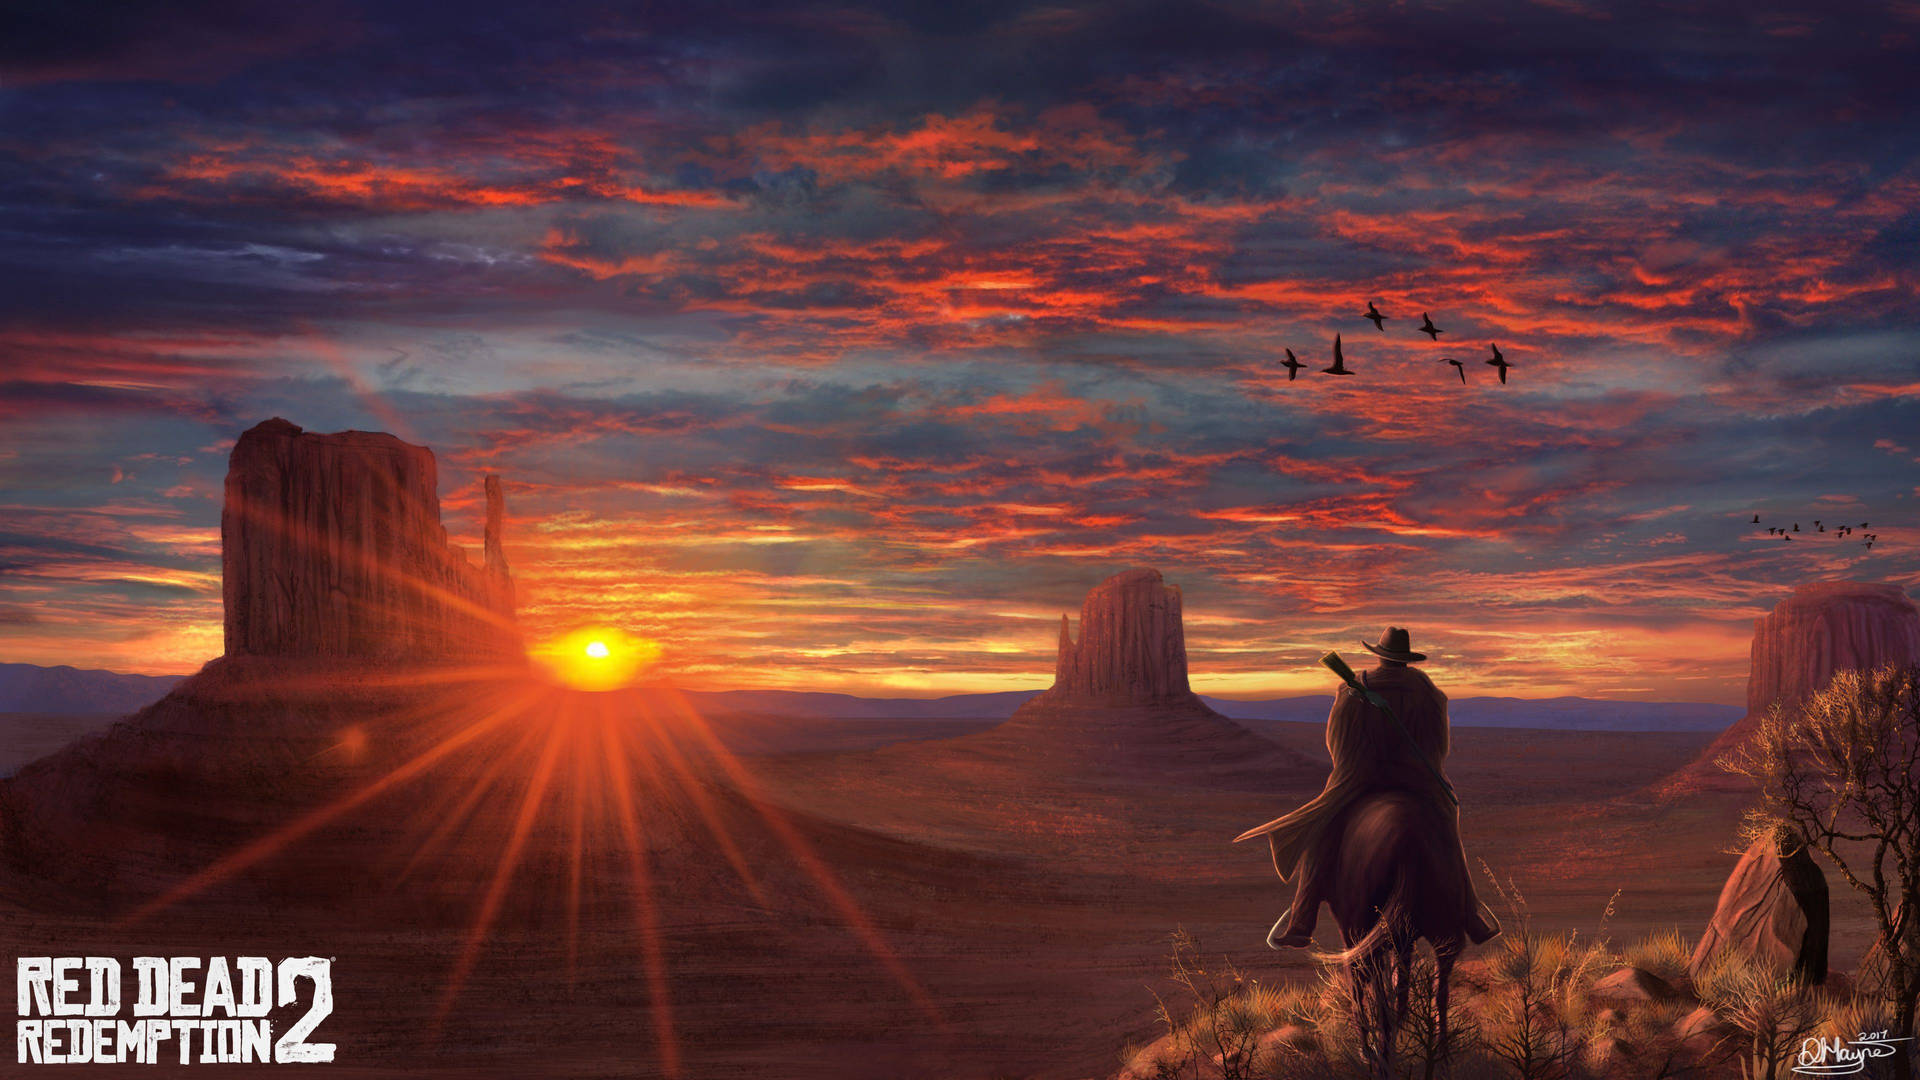 Horse Red Dead Redemption 2 Cowboy Sunset View Wallpaper